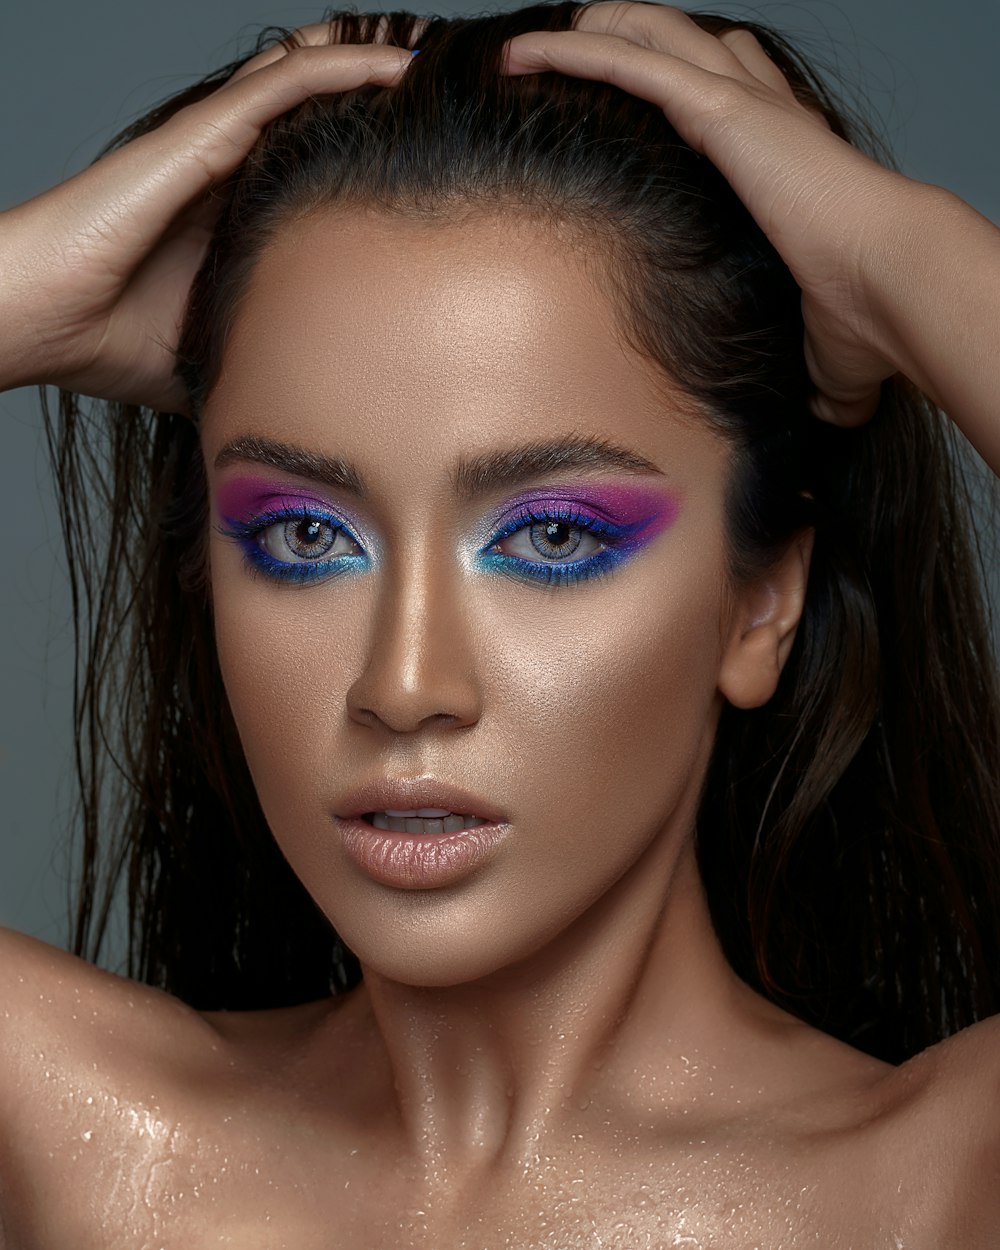 Makeup Model Pictures | Download Free Images on Unsplash